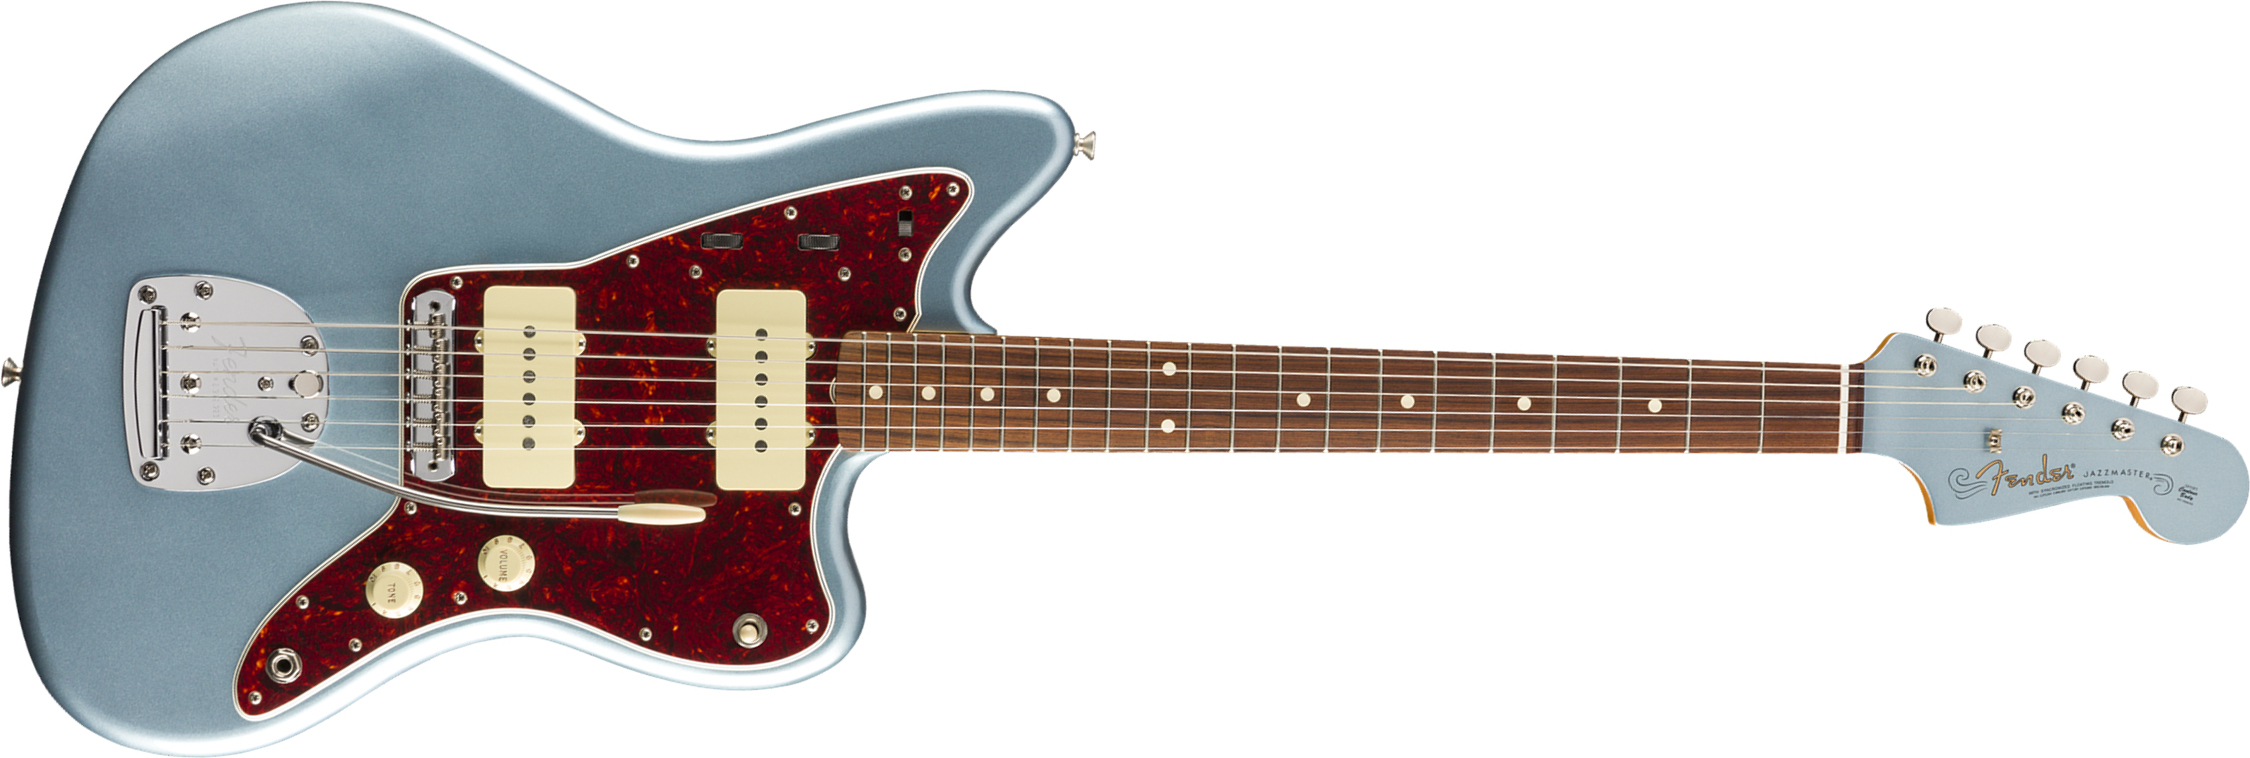 Fender Jazzmaster 60s Vintera Vintage Mex Pf - Ice Blue Metallic - Retro rock electric guitar - Main picture